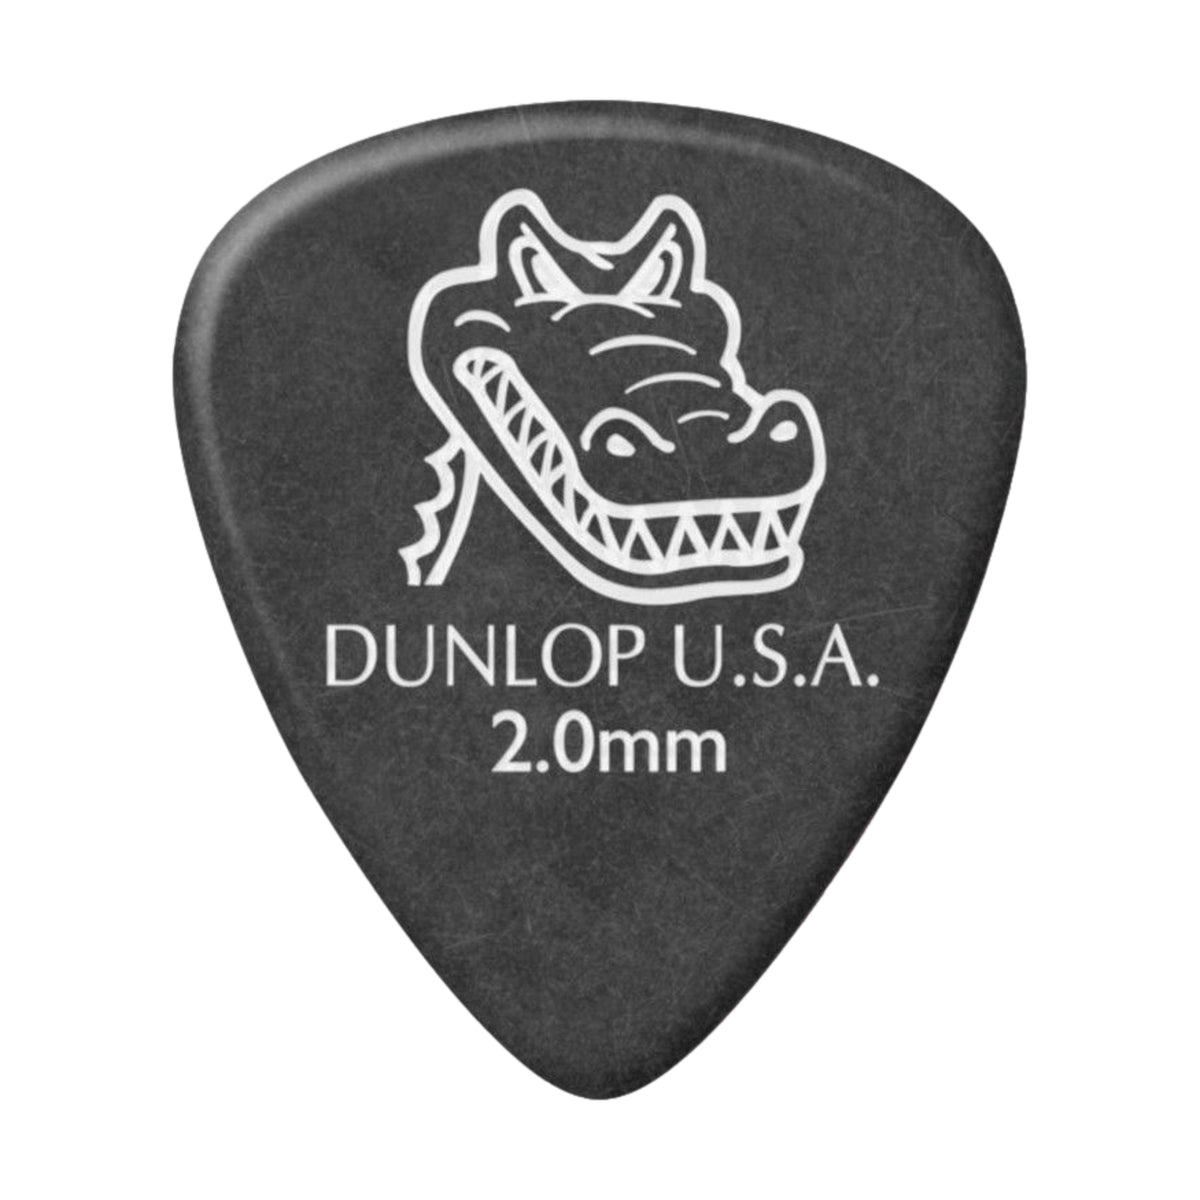 Dunlop Gator Grip 2mm Guitar Pick